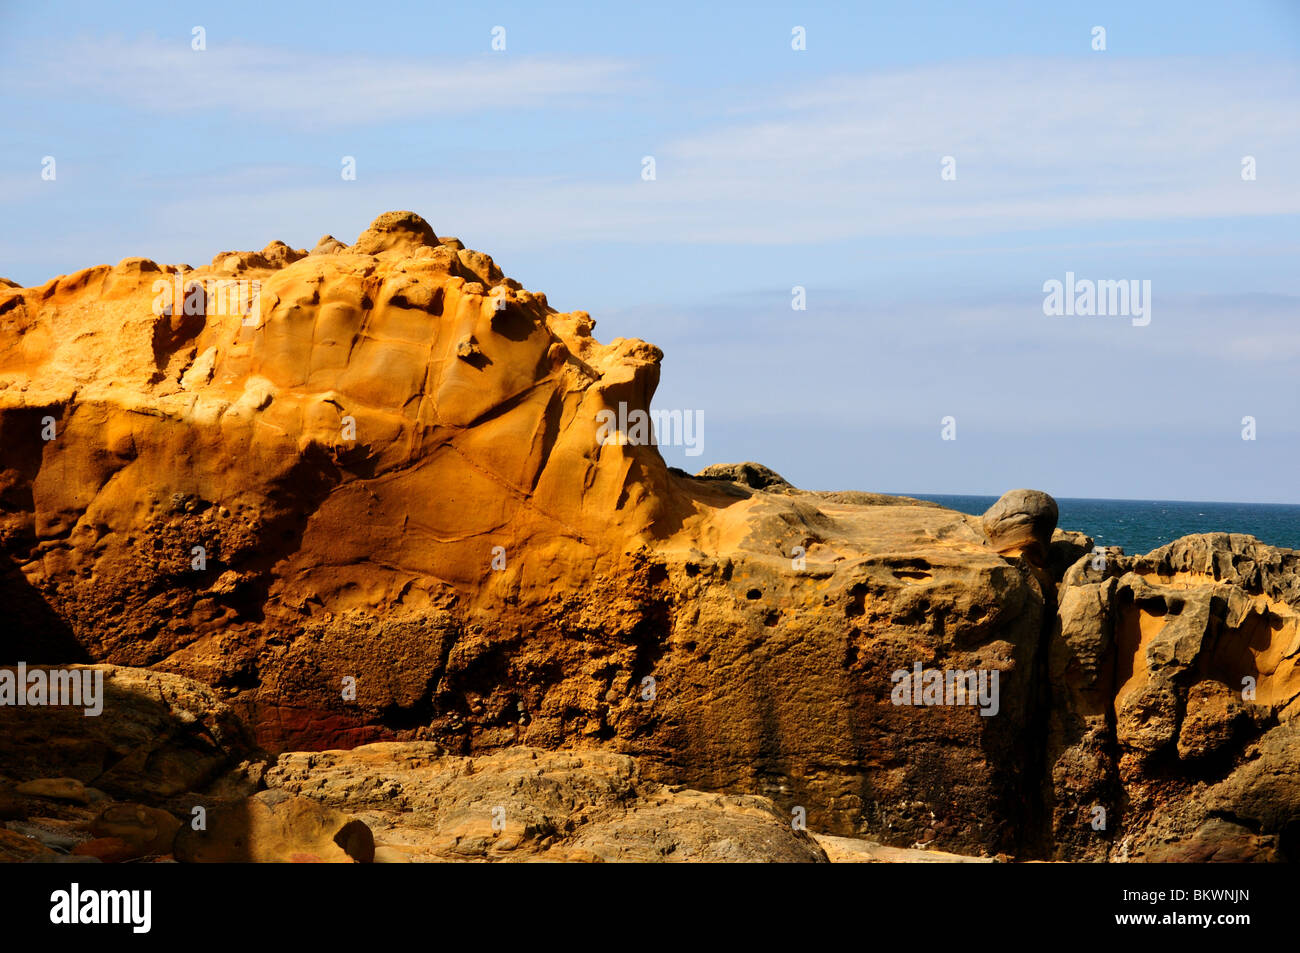 Rock formation along the coast of California, USA. Stock Photo